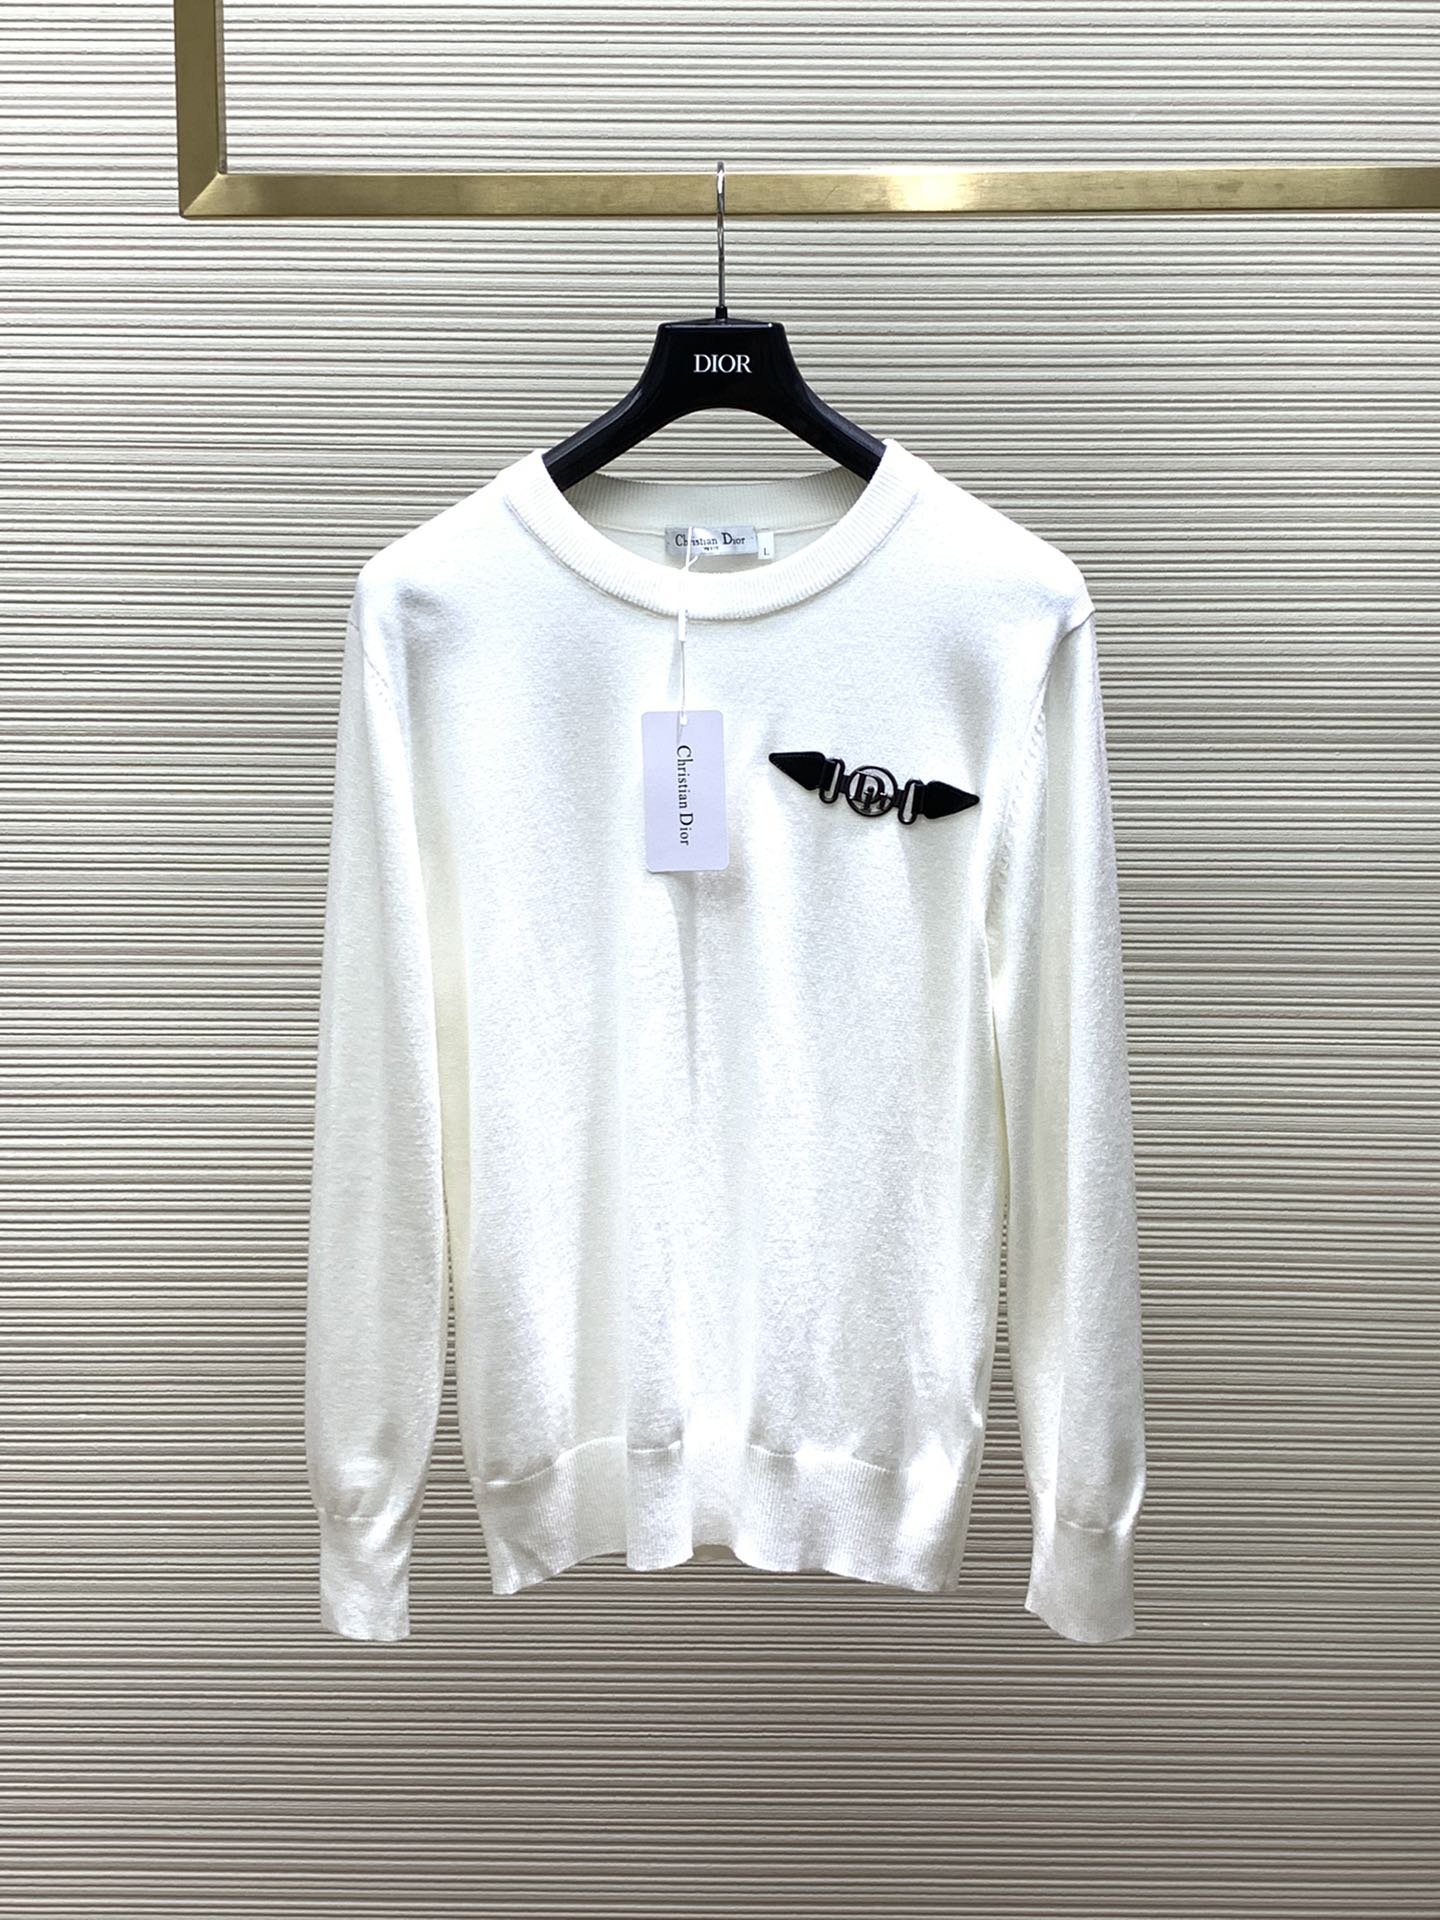 Dior Fashion
 Clothing Knit Sweater Sweatshirts Knitting Fall/Winter Collection Fashion Long Sleeve